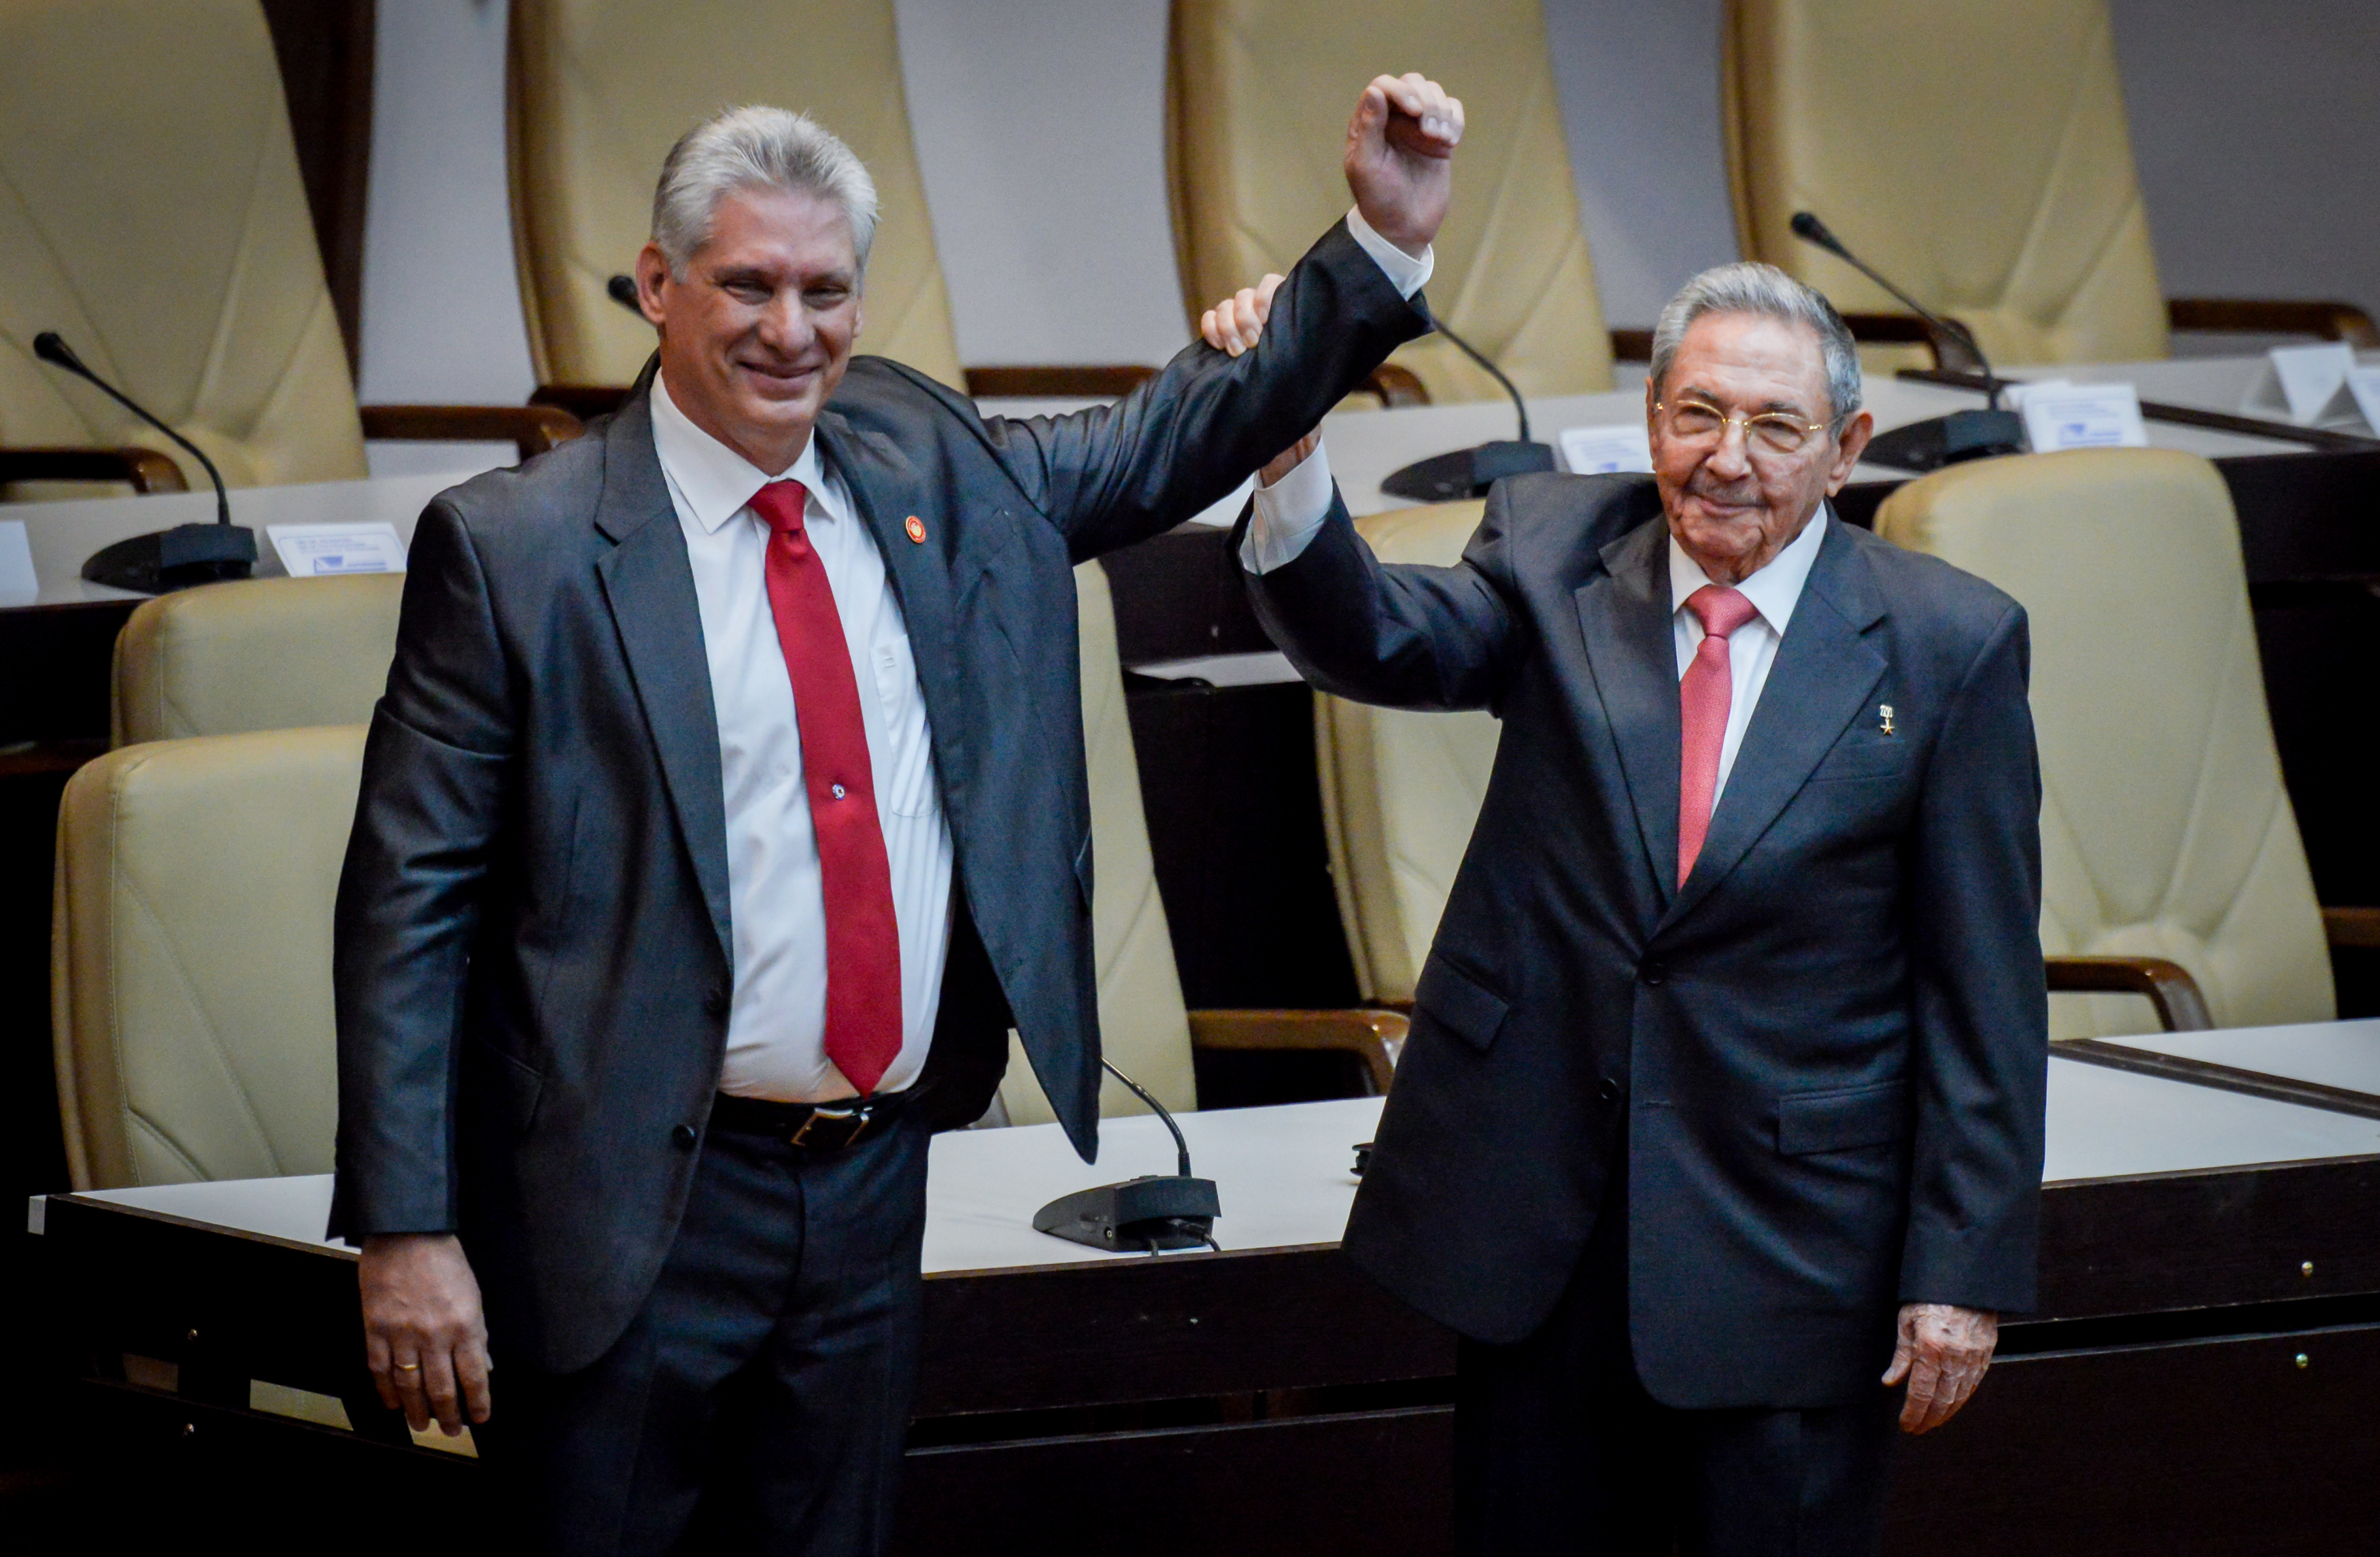 Miguel Diaz-Canel named Cuba's new president - CNN Video